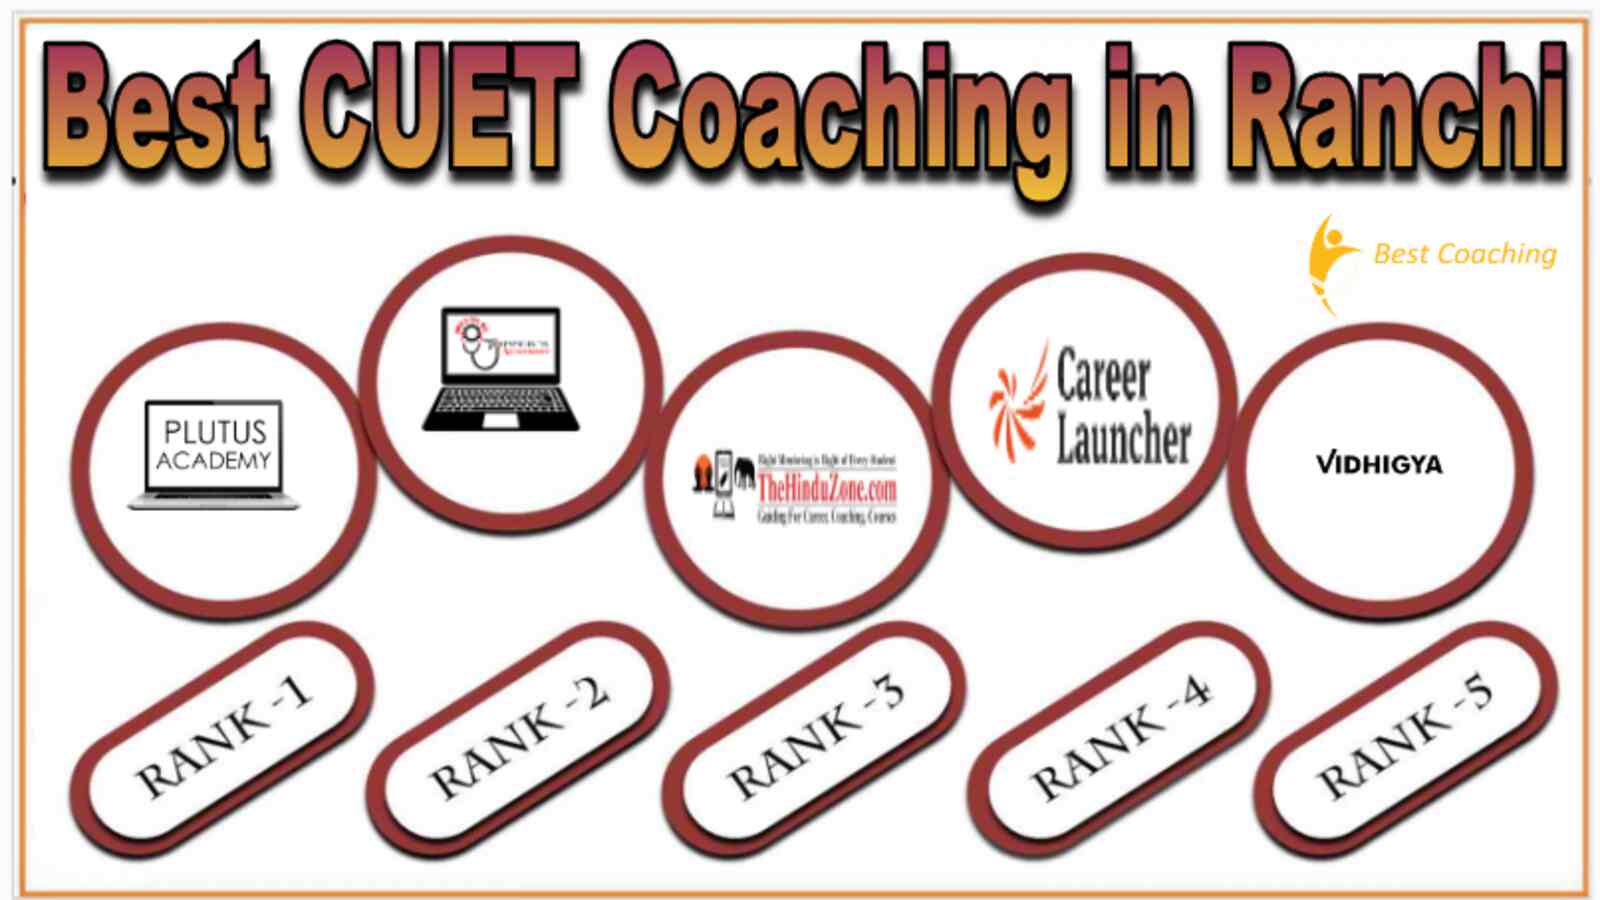 Best CUET Coaching in Ranchi